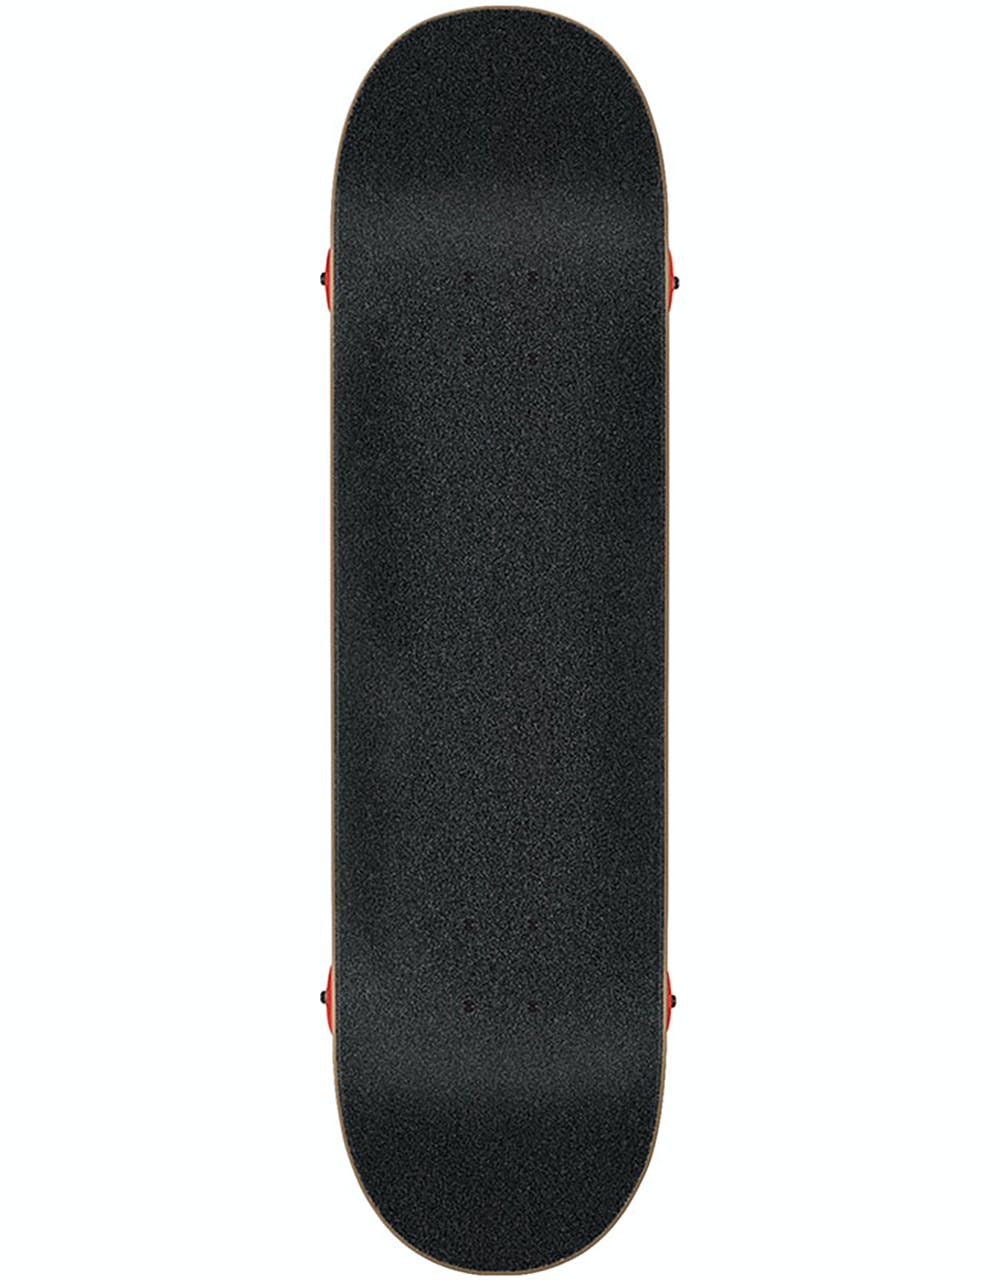 Santa Cruz Classic Dot Mini Complete Skateboard - 7.25"